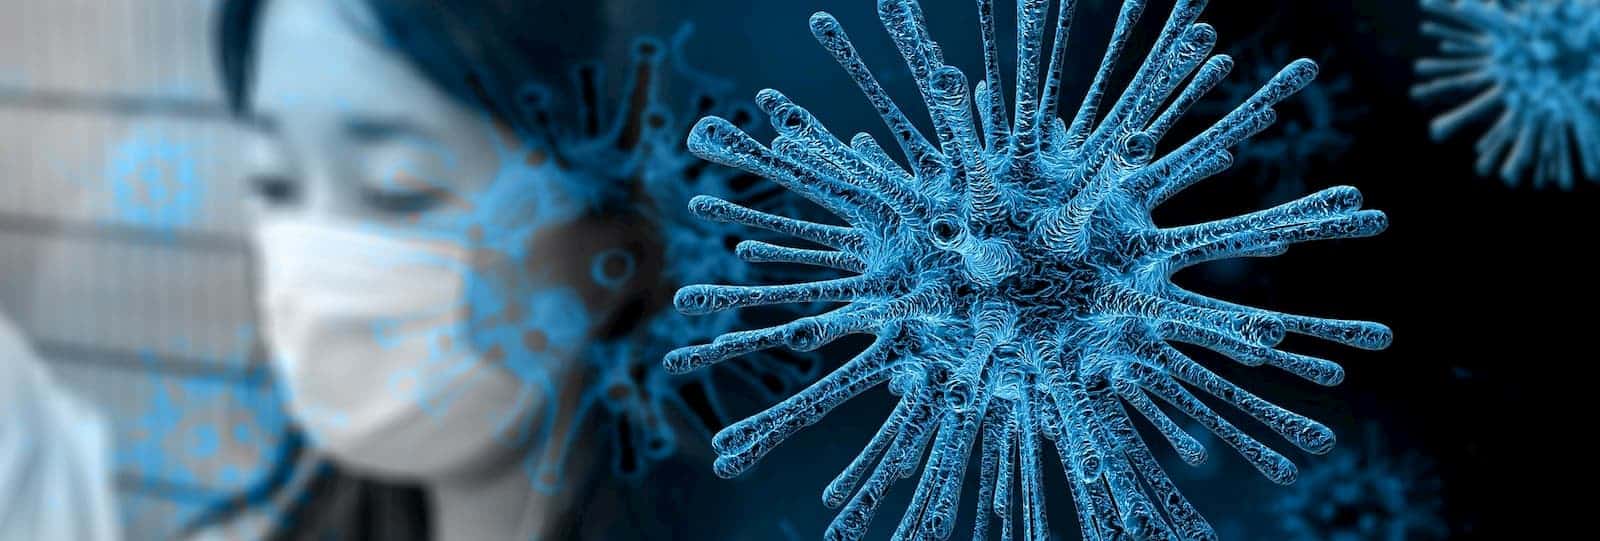 Coronavirus : l’OMS met en garde contre les campagnes malveillantes sur la toile